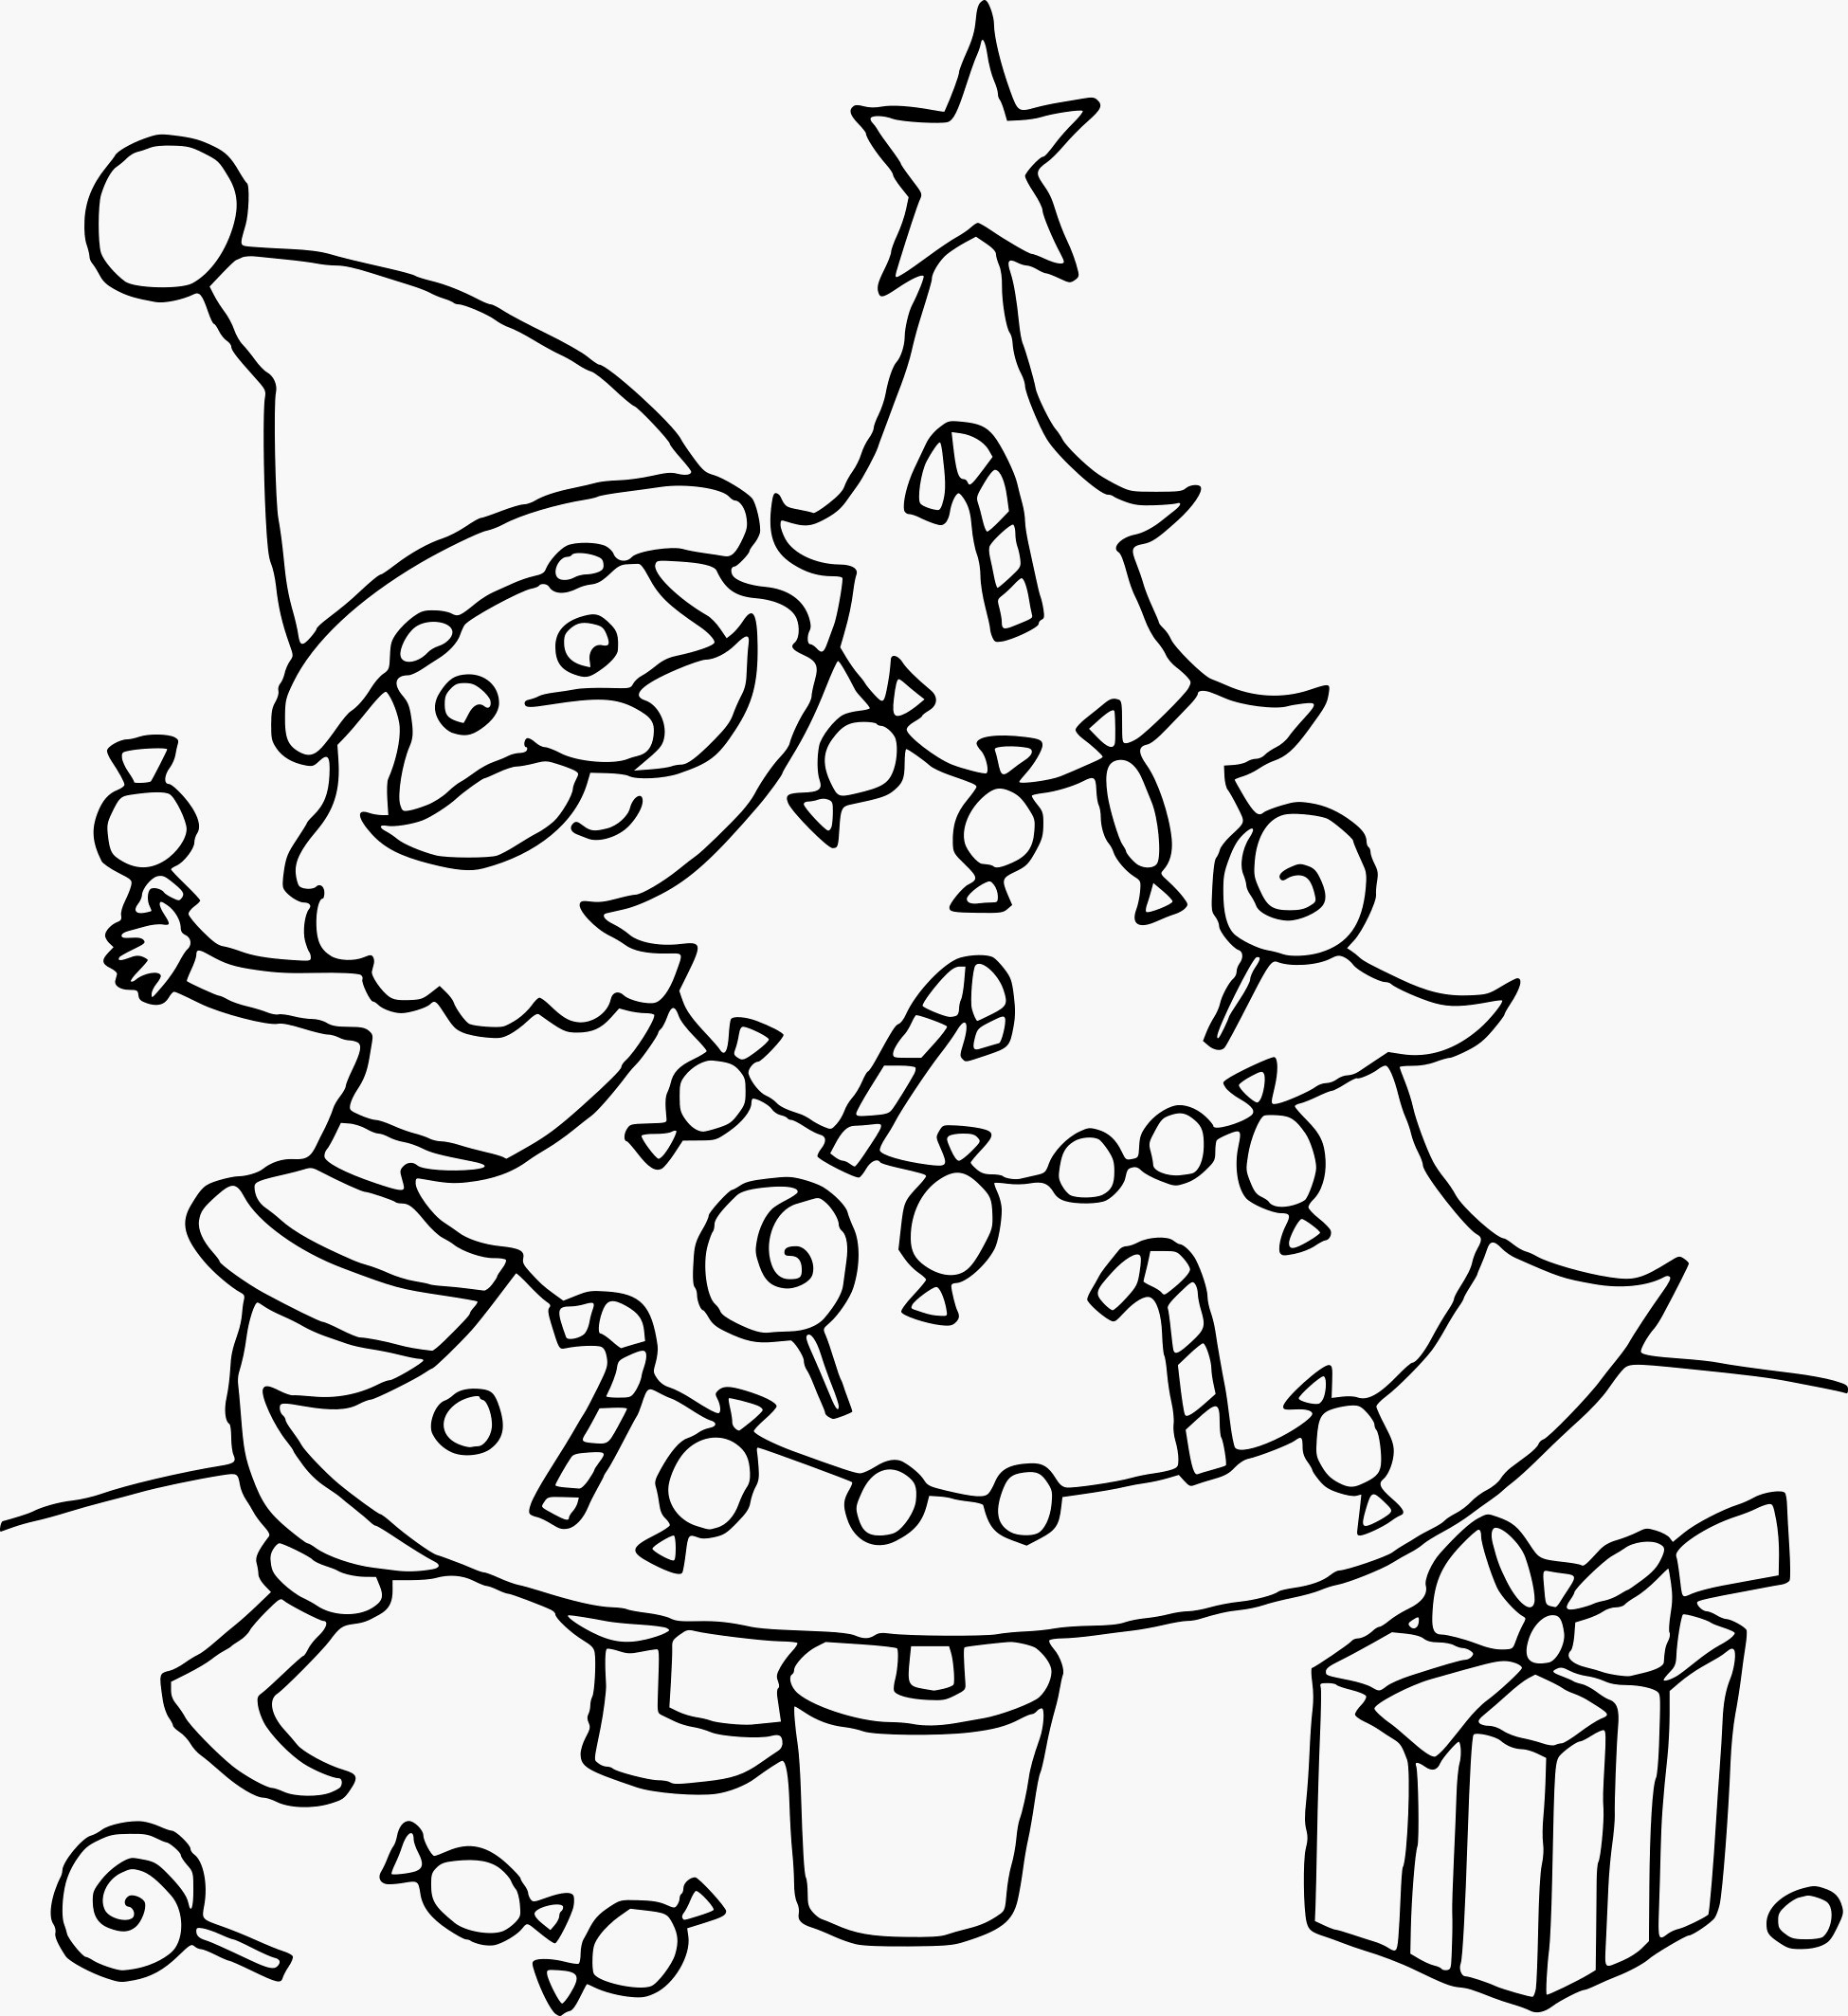 Coloriages À Imprimer : Sapin De Noël, Numéro : 118Cb1F9 concernant Dessins De Noel